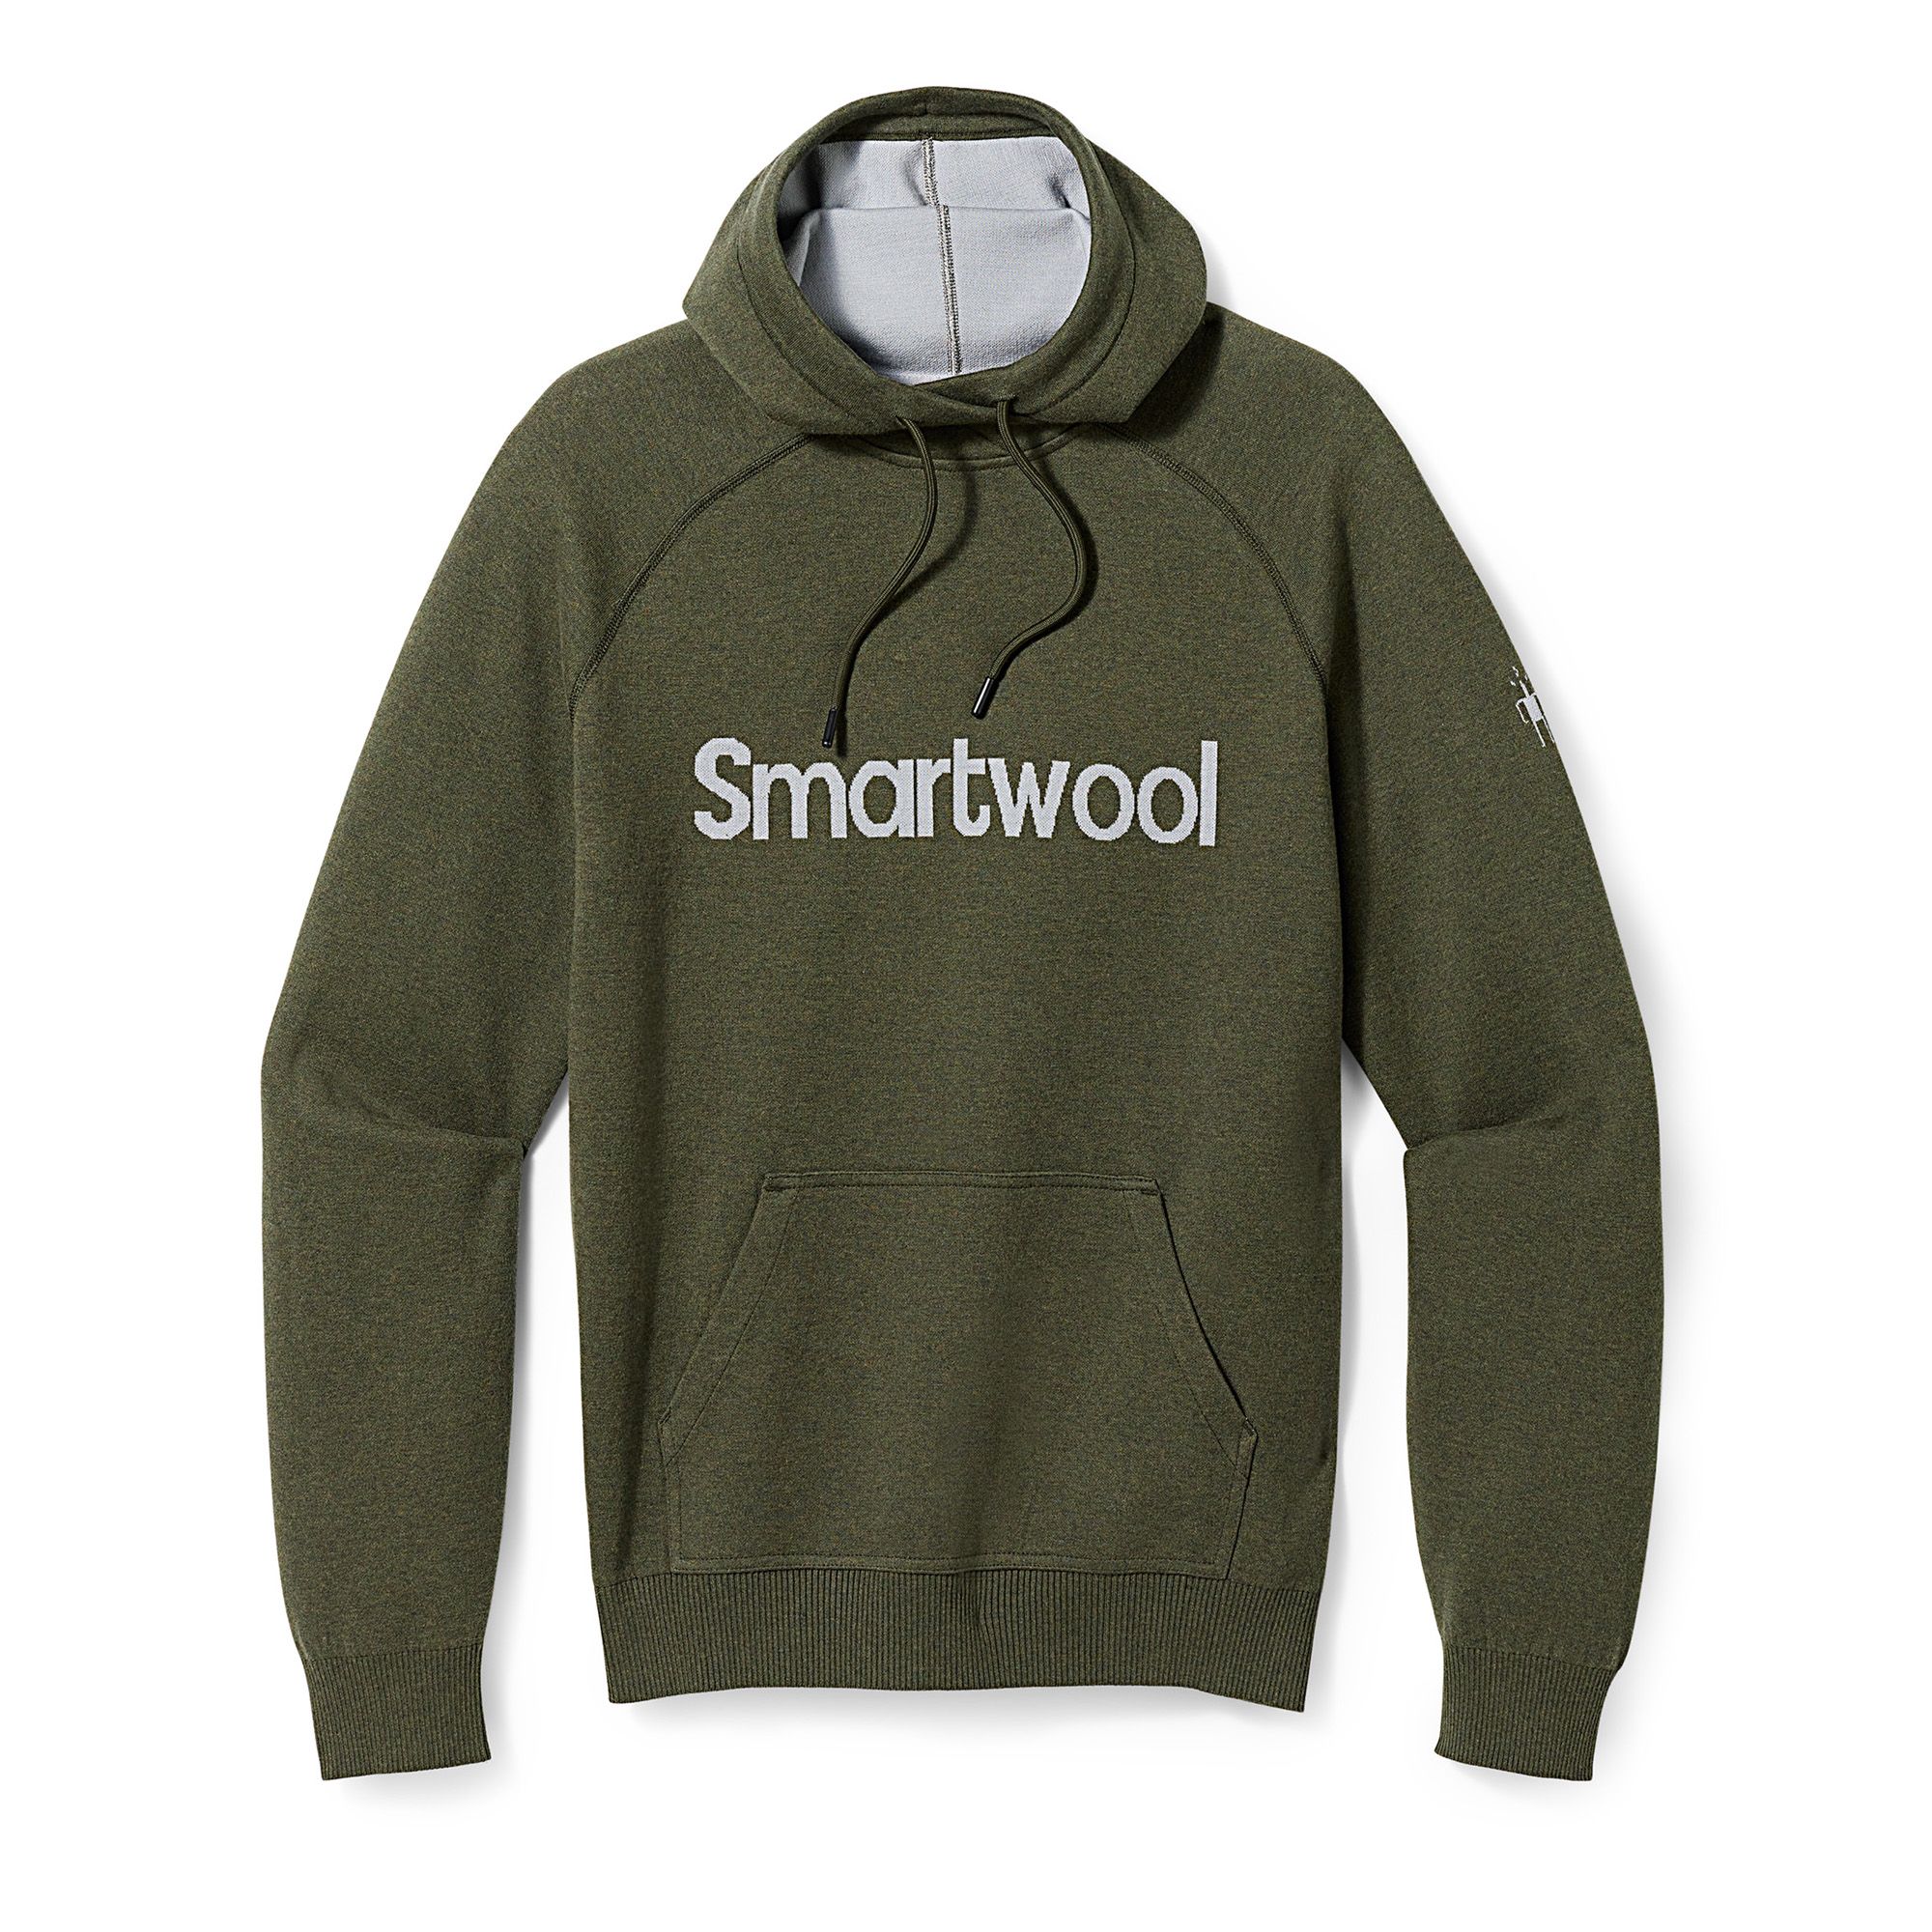 Smartwool Merino Cotton Logo Hoodie in North Woods